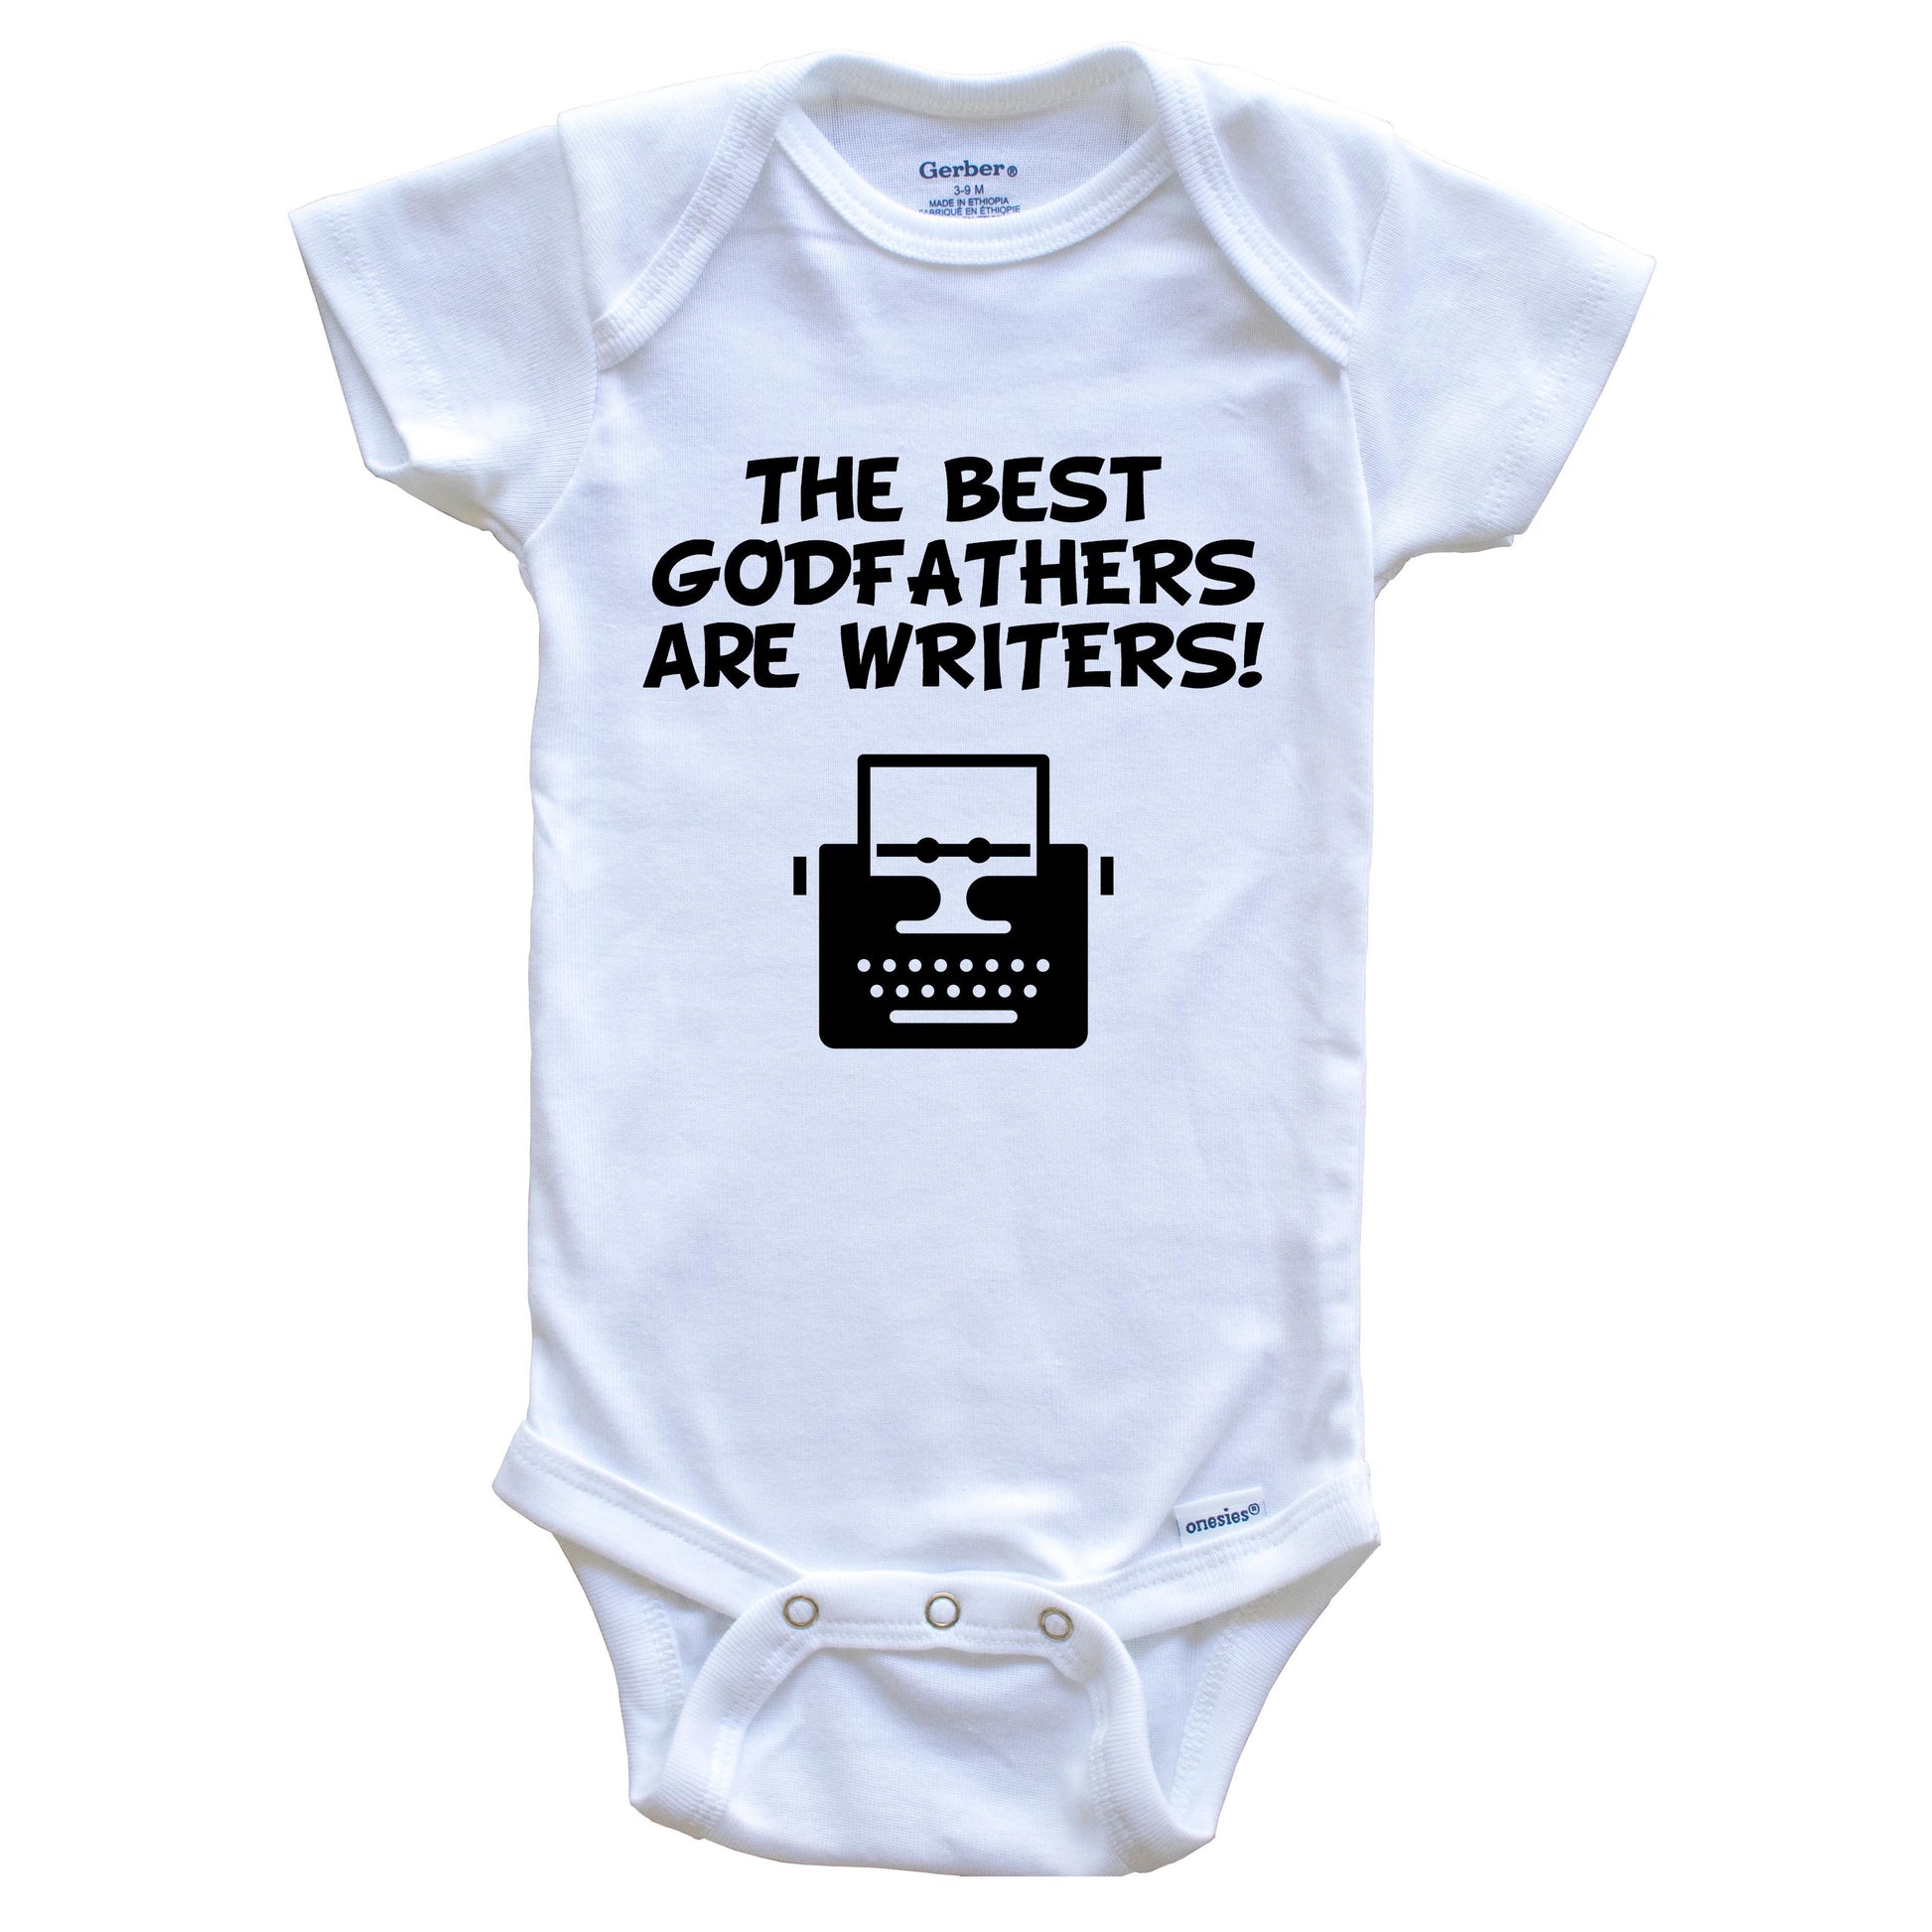 The Best Godfathers Are Writers Funny Godchild Baby Onesie